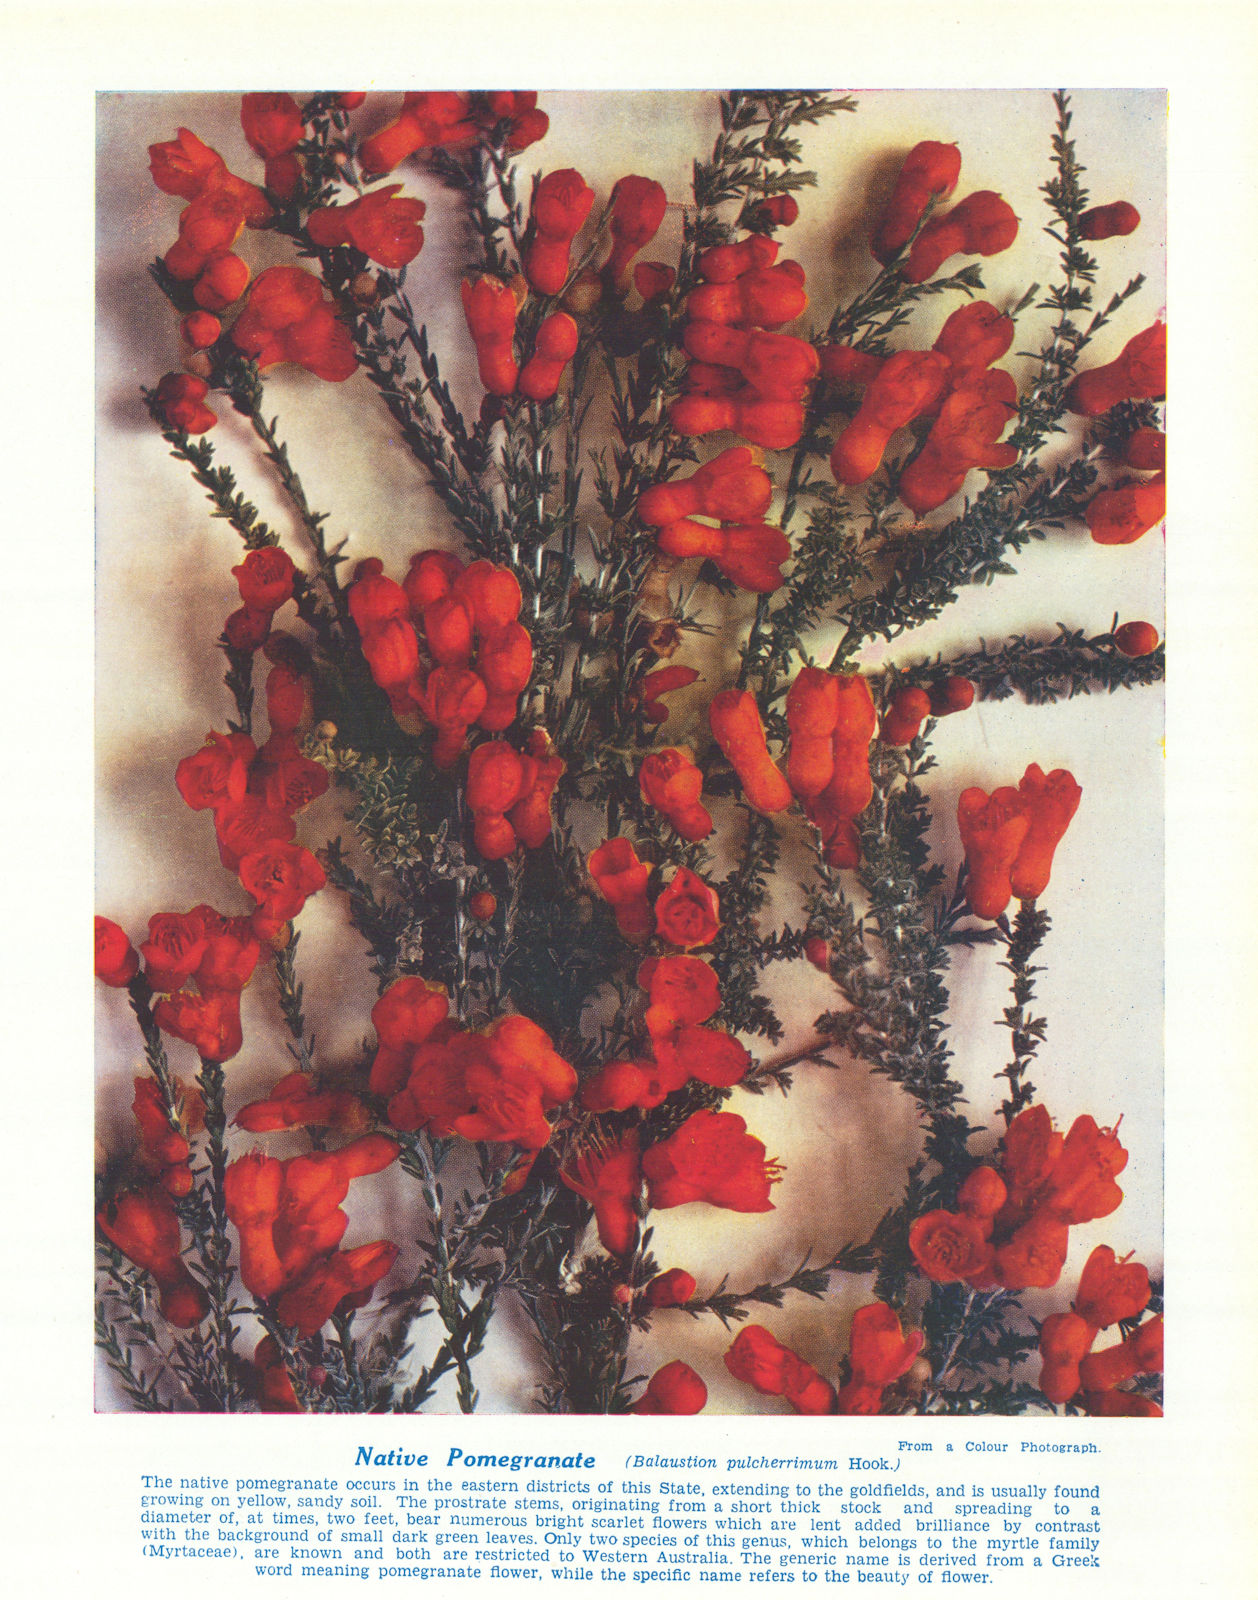 Associate Product Native Pomegranate (Balaustion pulcherrimum). West Australian Wild Flowers 1950